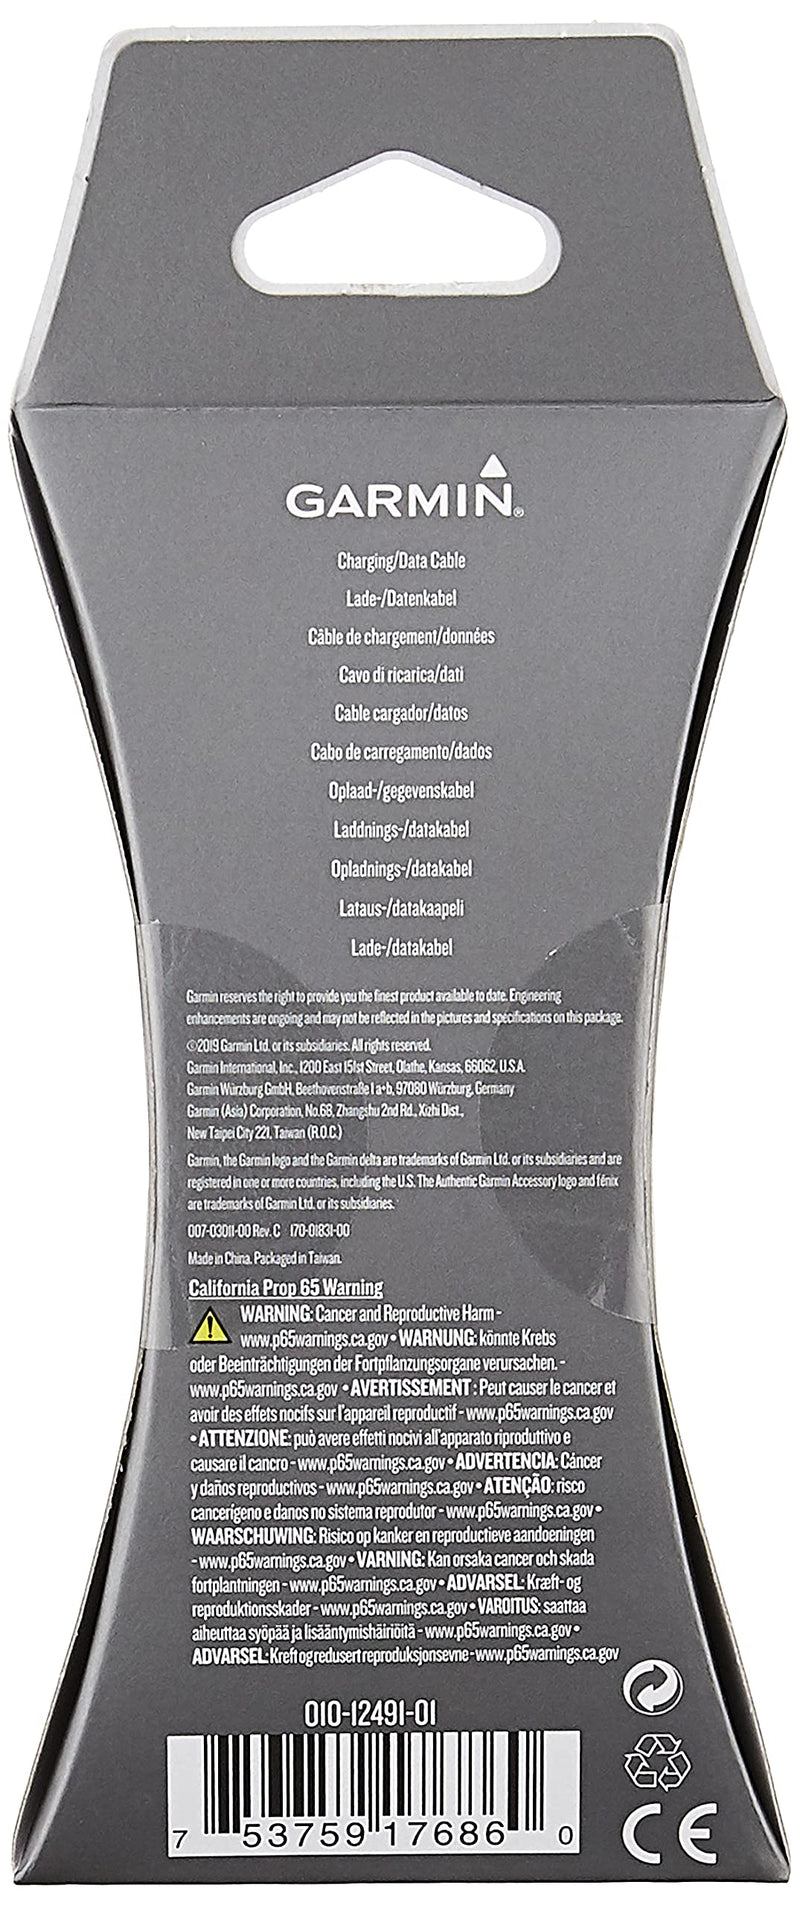 Charger for Multiple Garmin Devices, 010-12491-01 New - LeoForward Australia